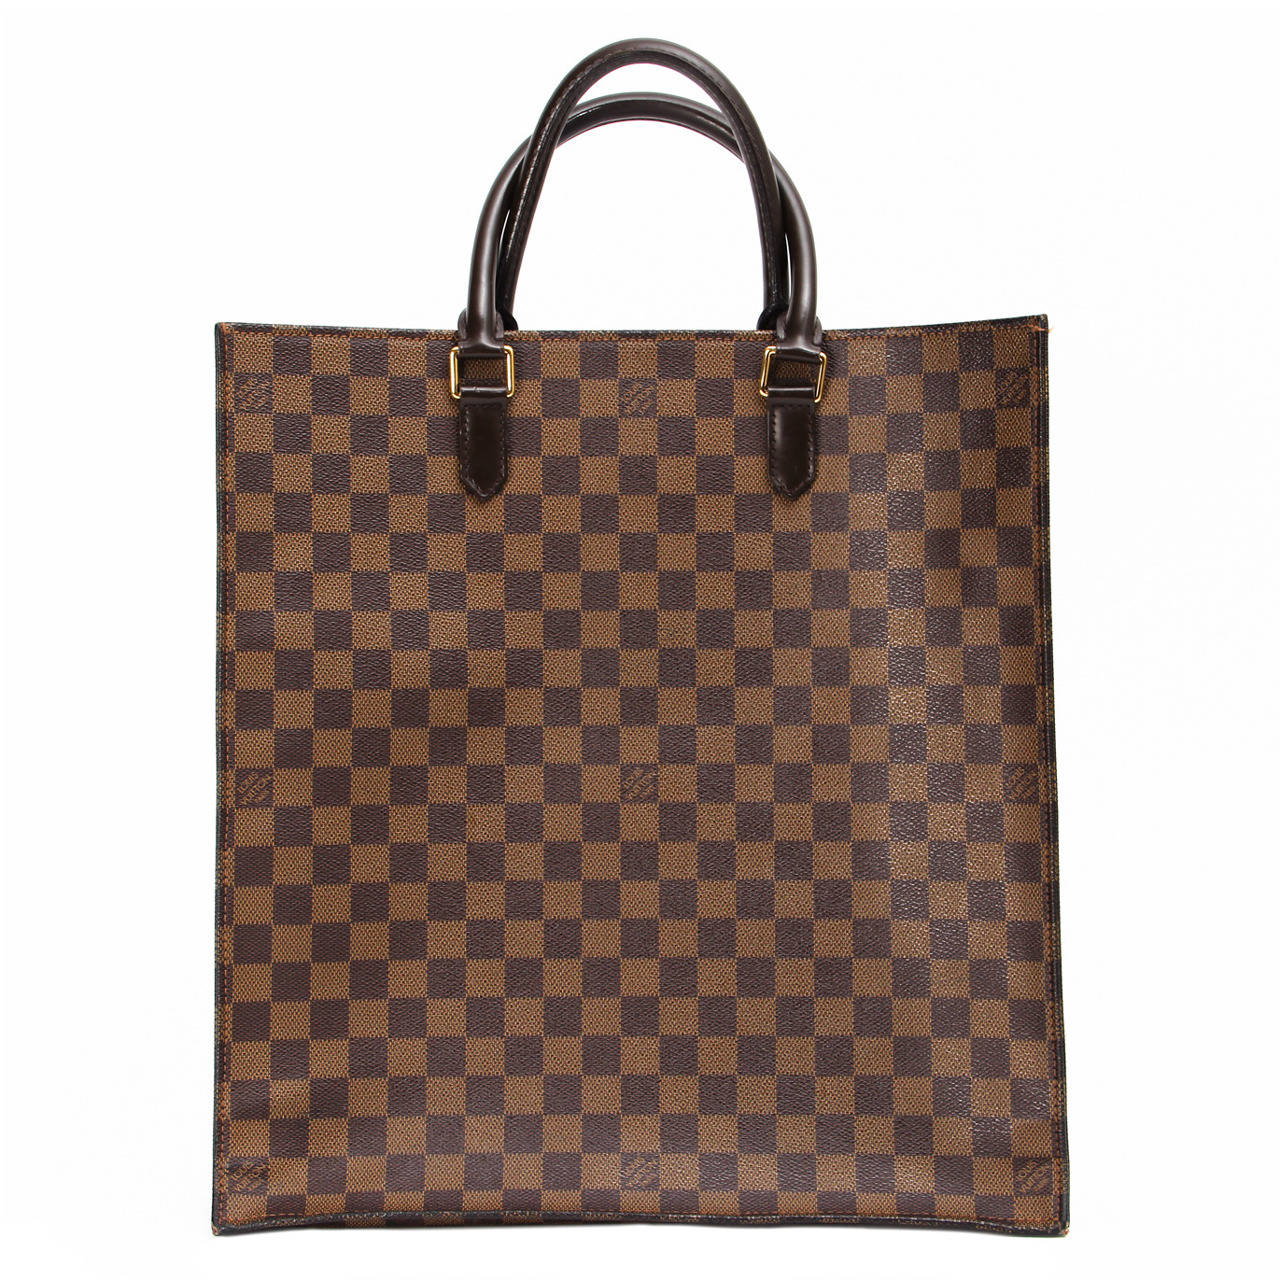 Checked pattern Louis Vuitton Handbag basket